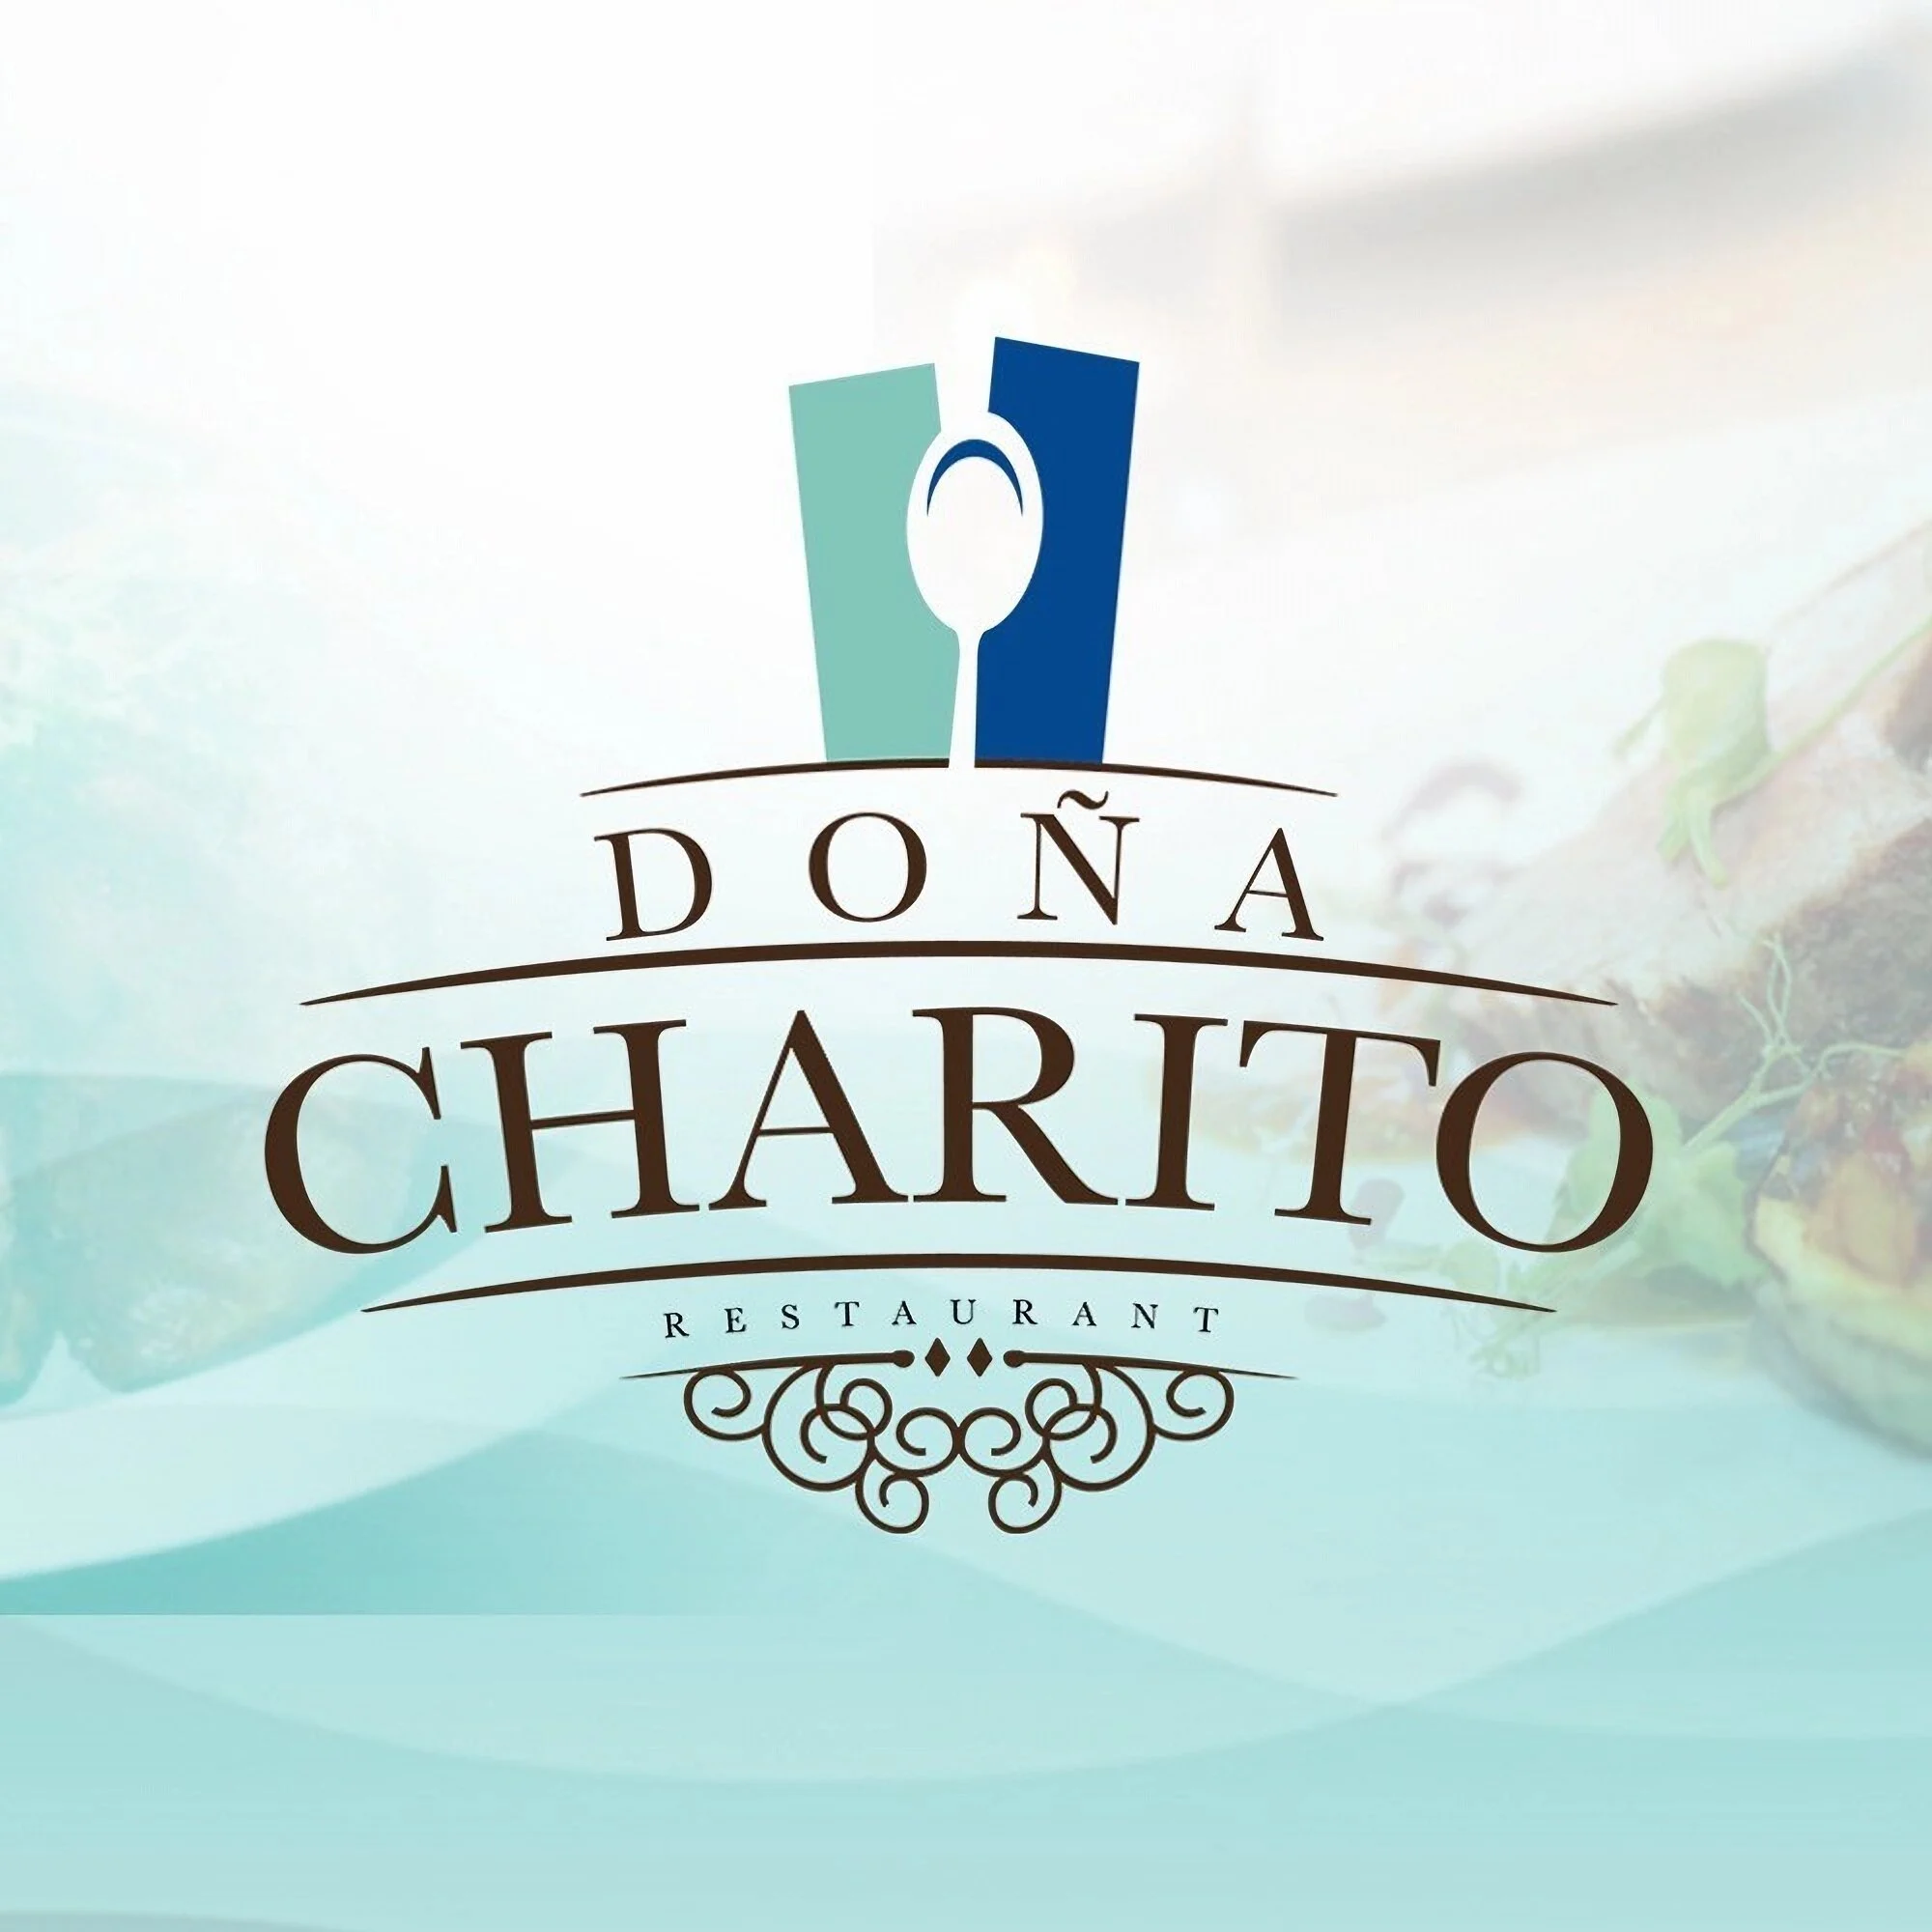 Restaurantes-dona-charito-restaurante-17955